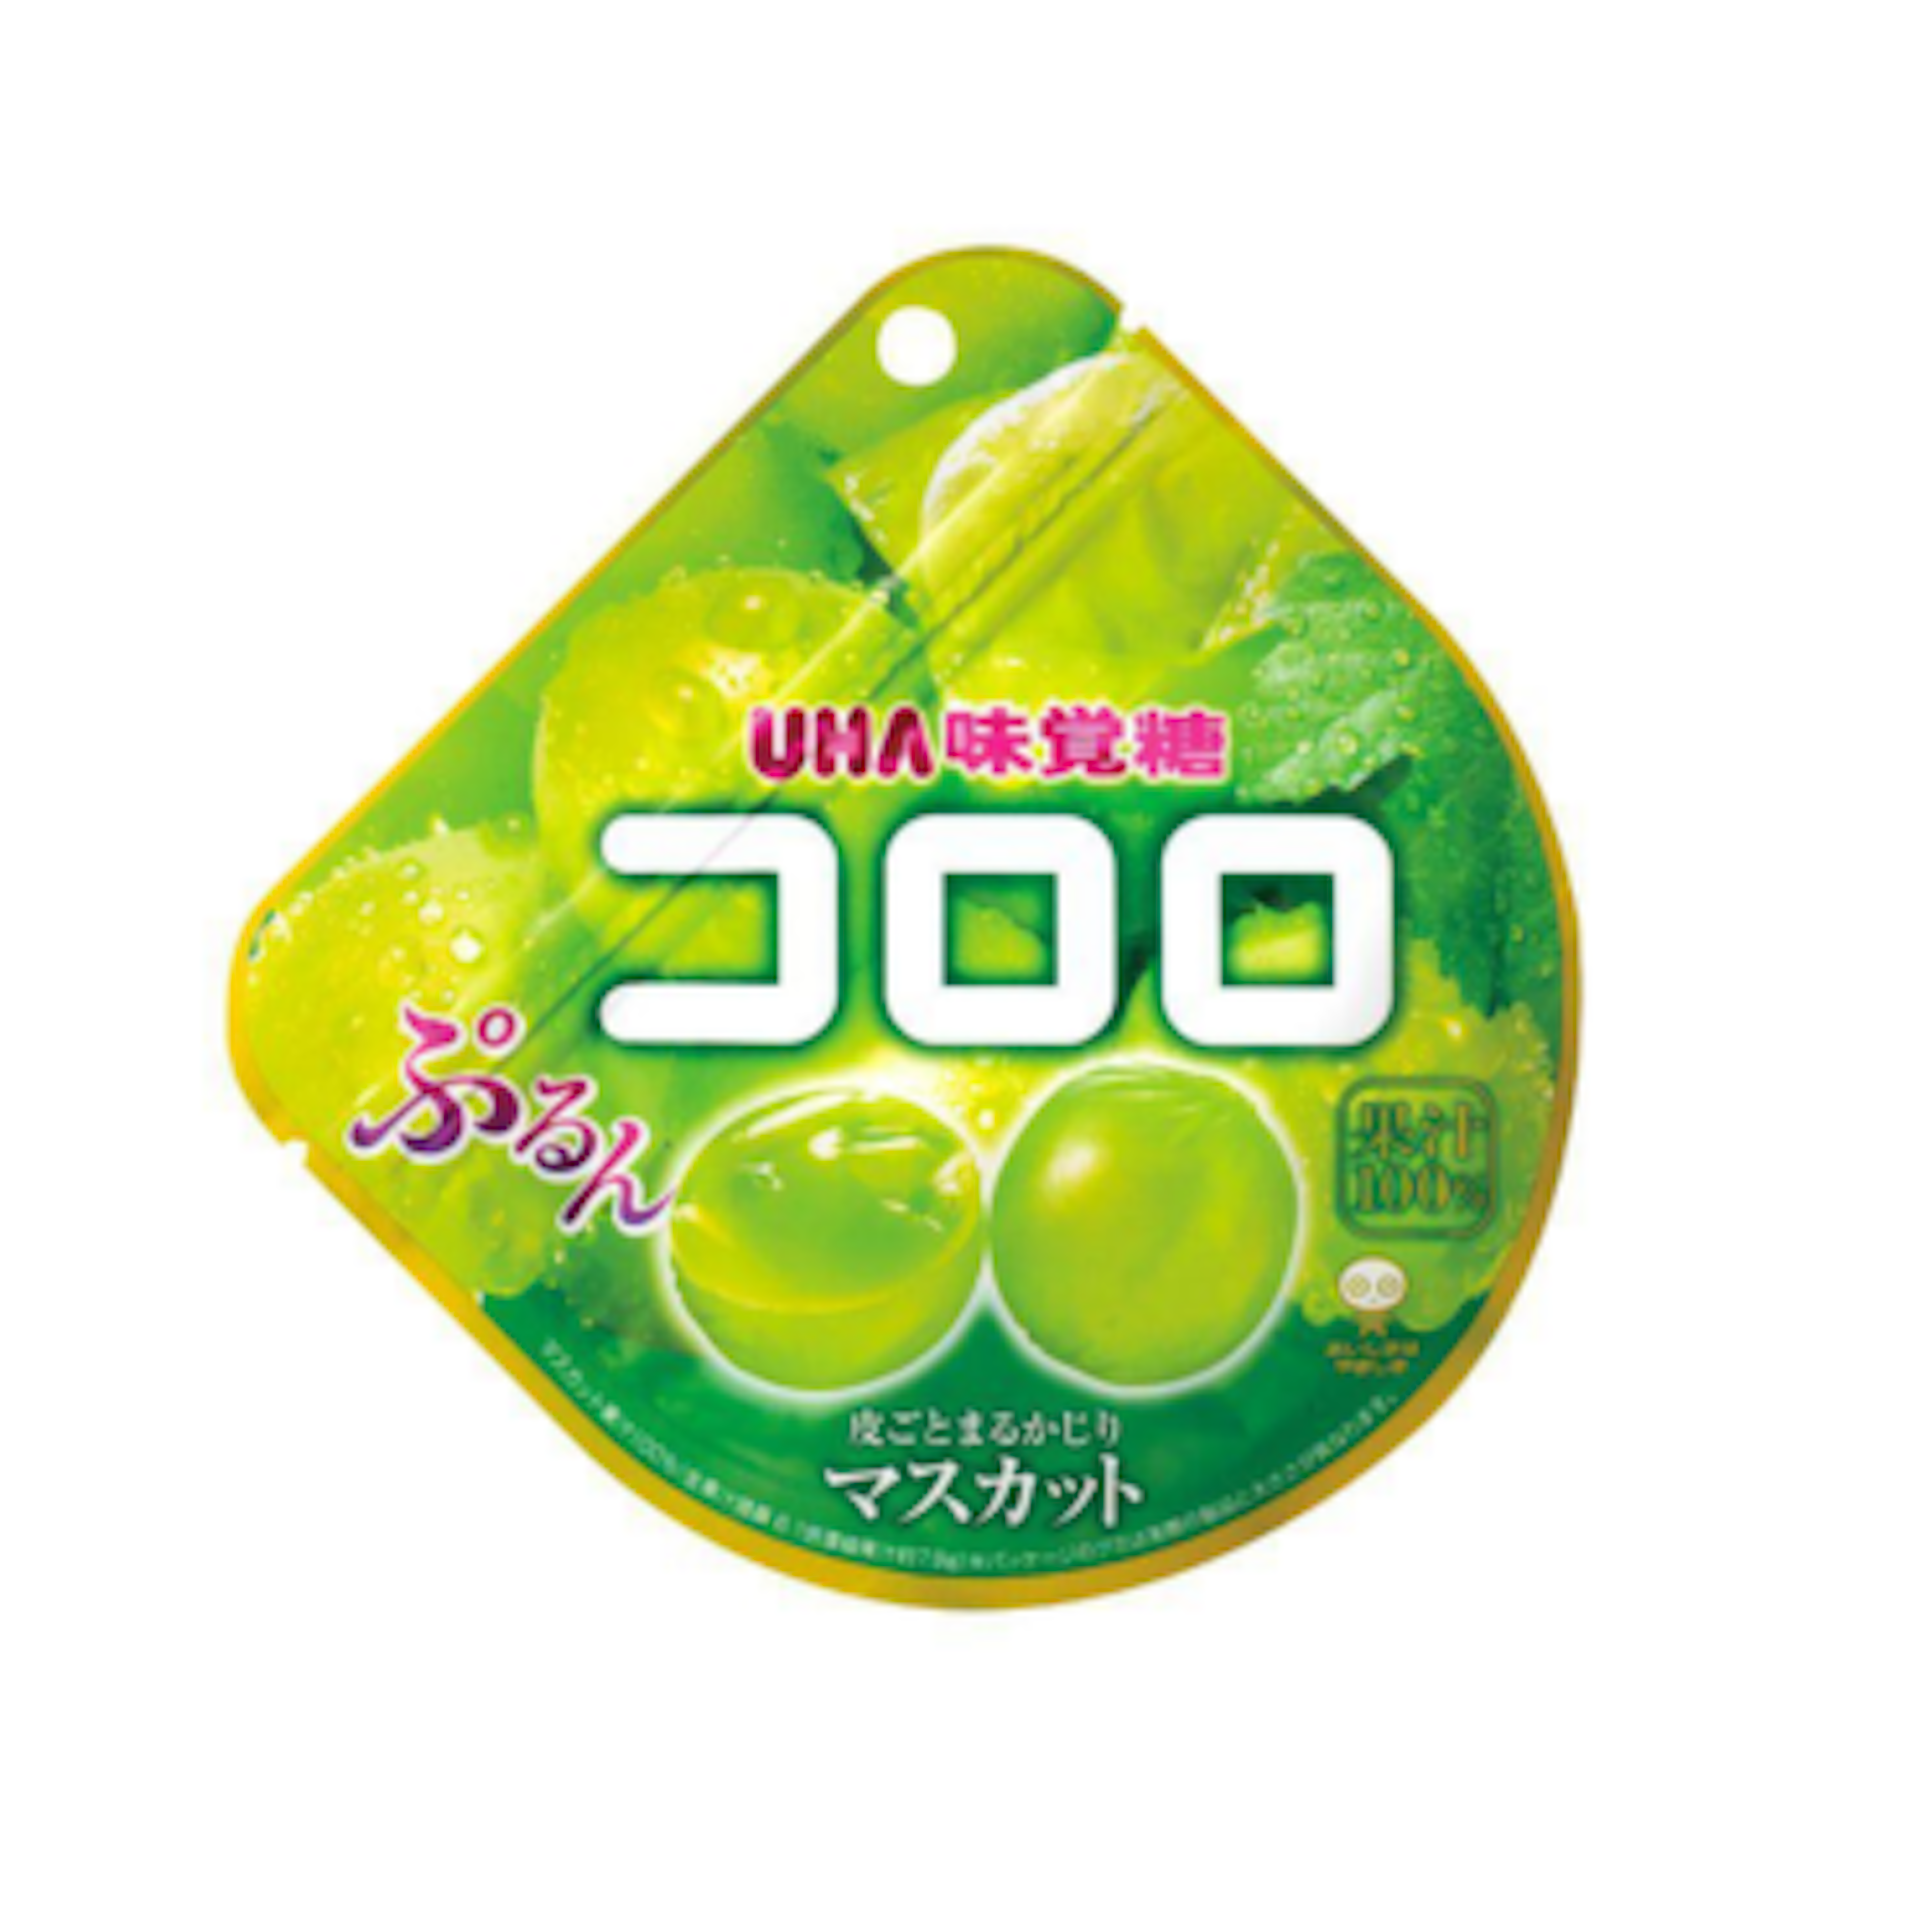 UHA Mikakuto Kororo Weiße Muskat Trauben Gummibonbons 48g - Fruchtige und zähe Gummibonbons